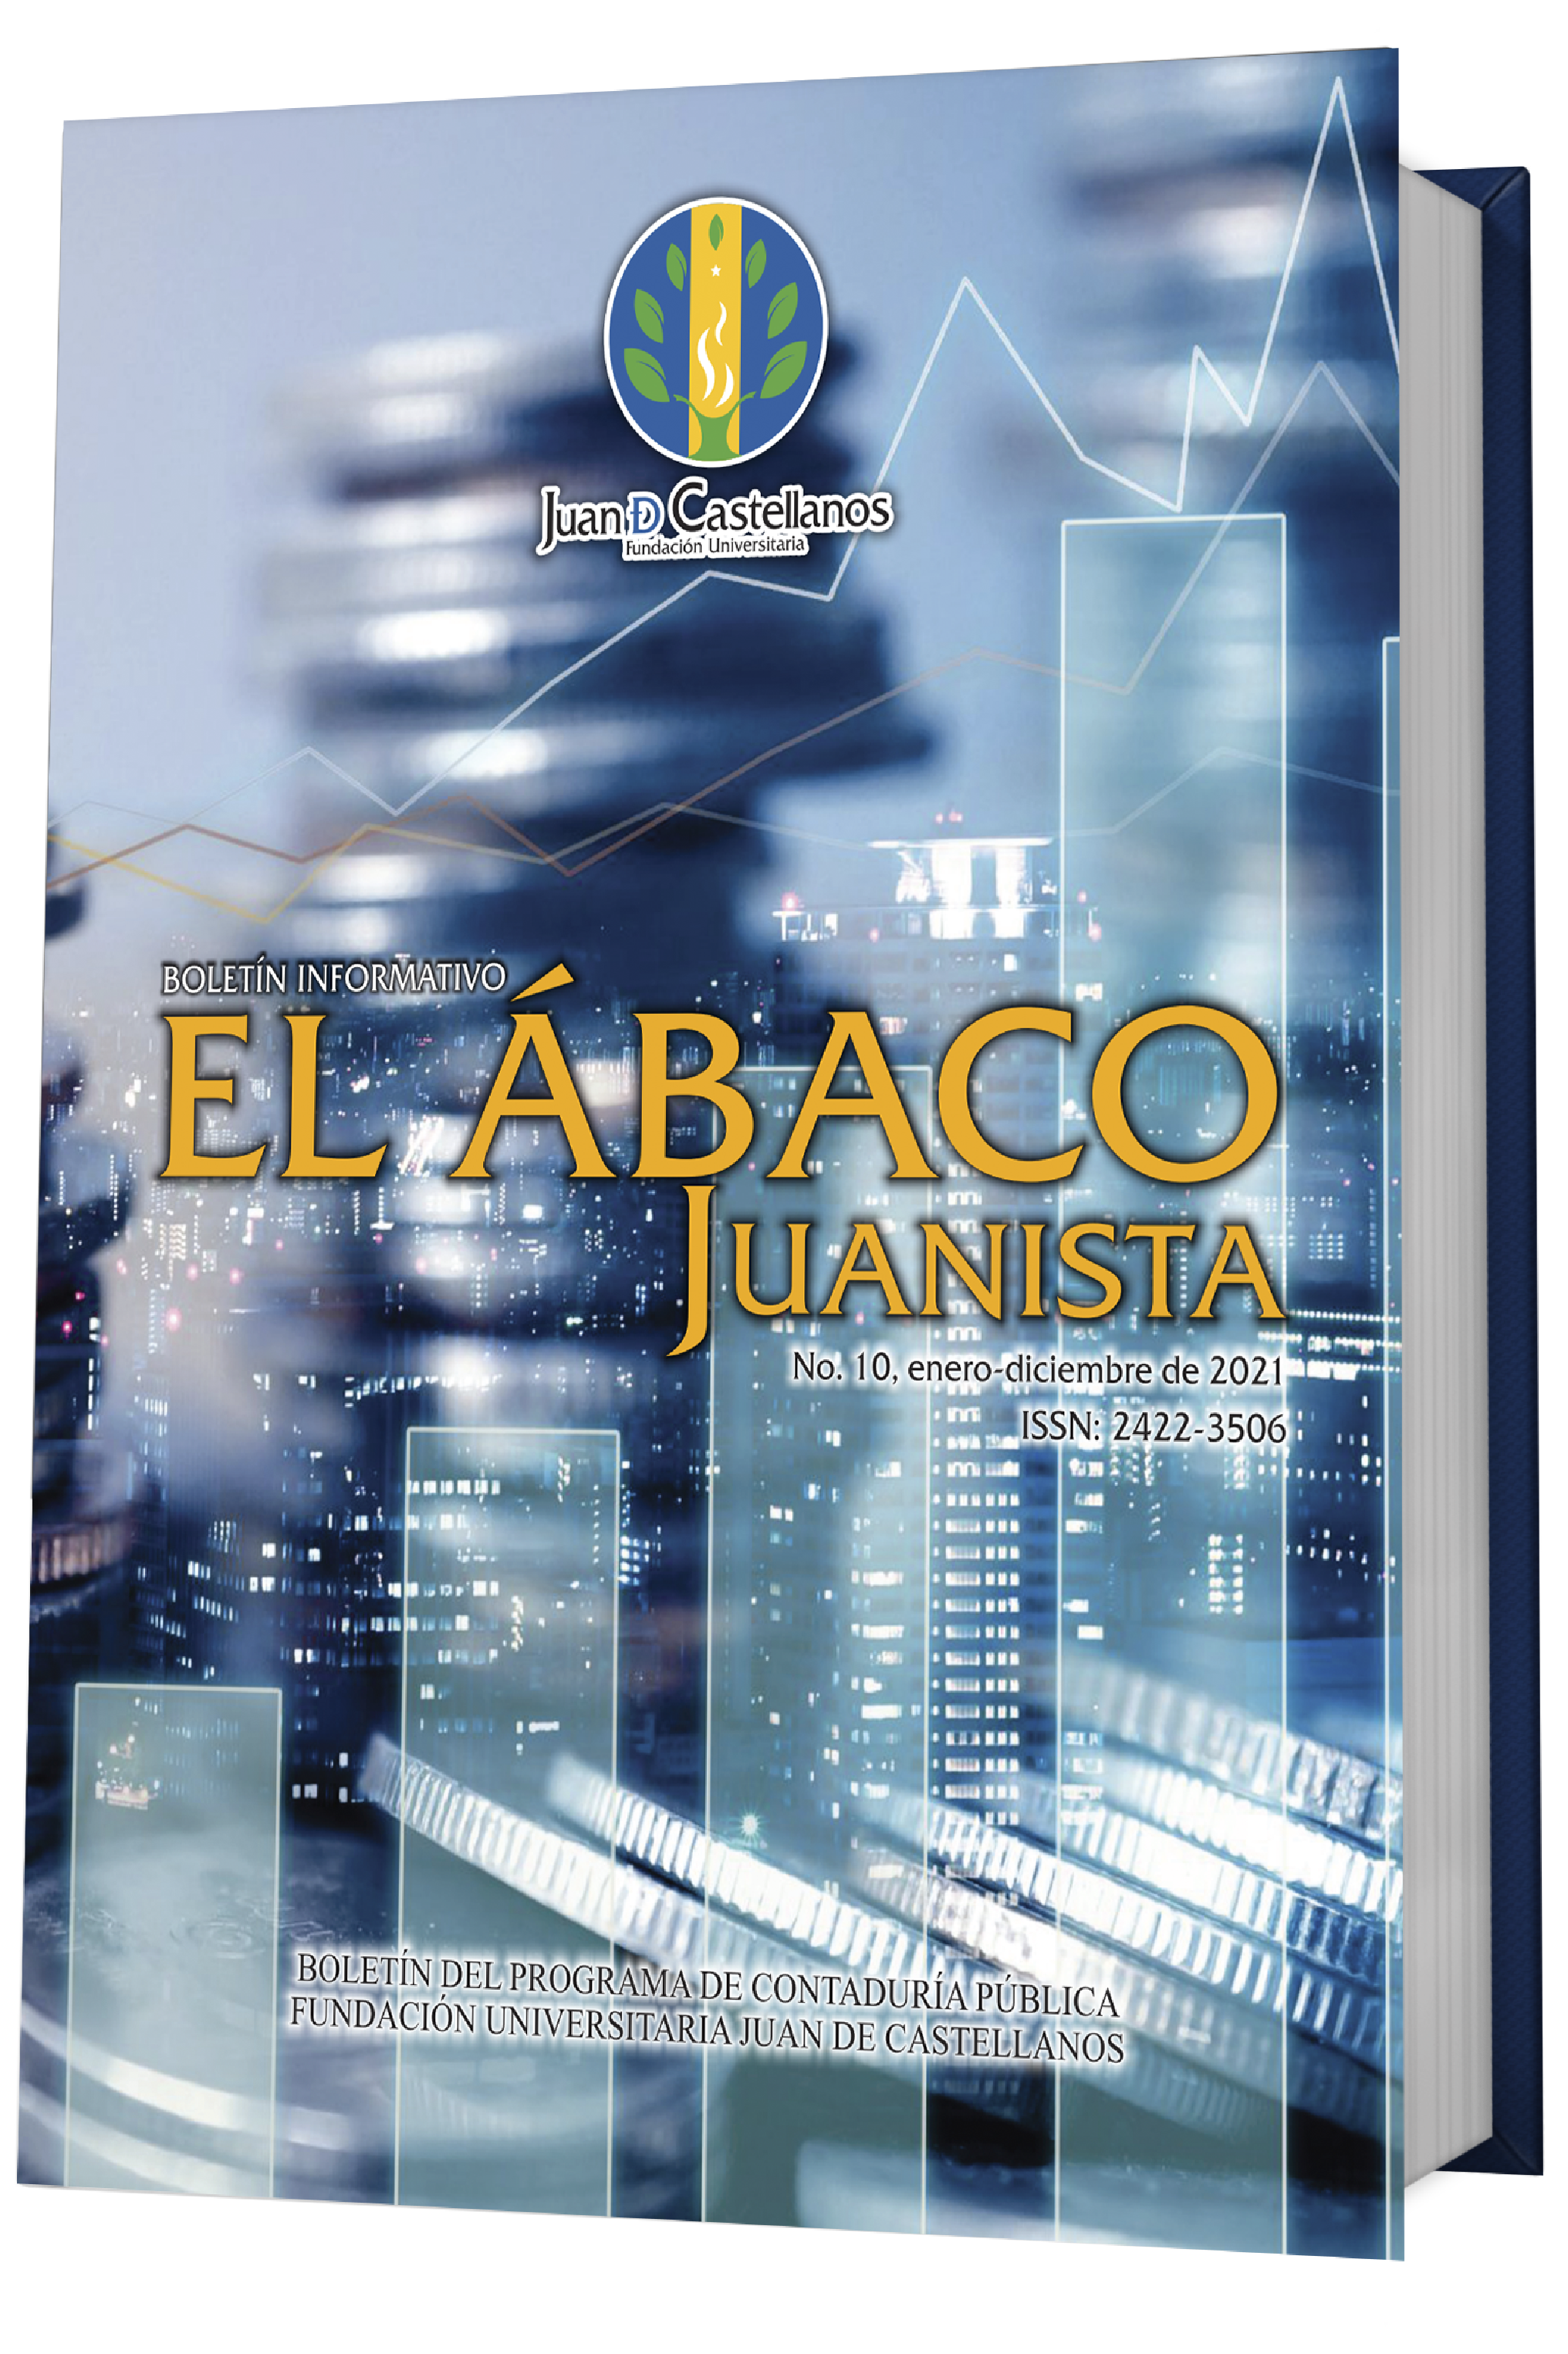 Cover of El ABACO Nº10 - 2021